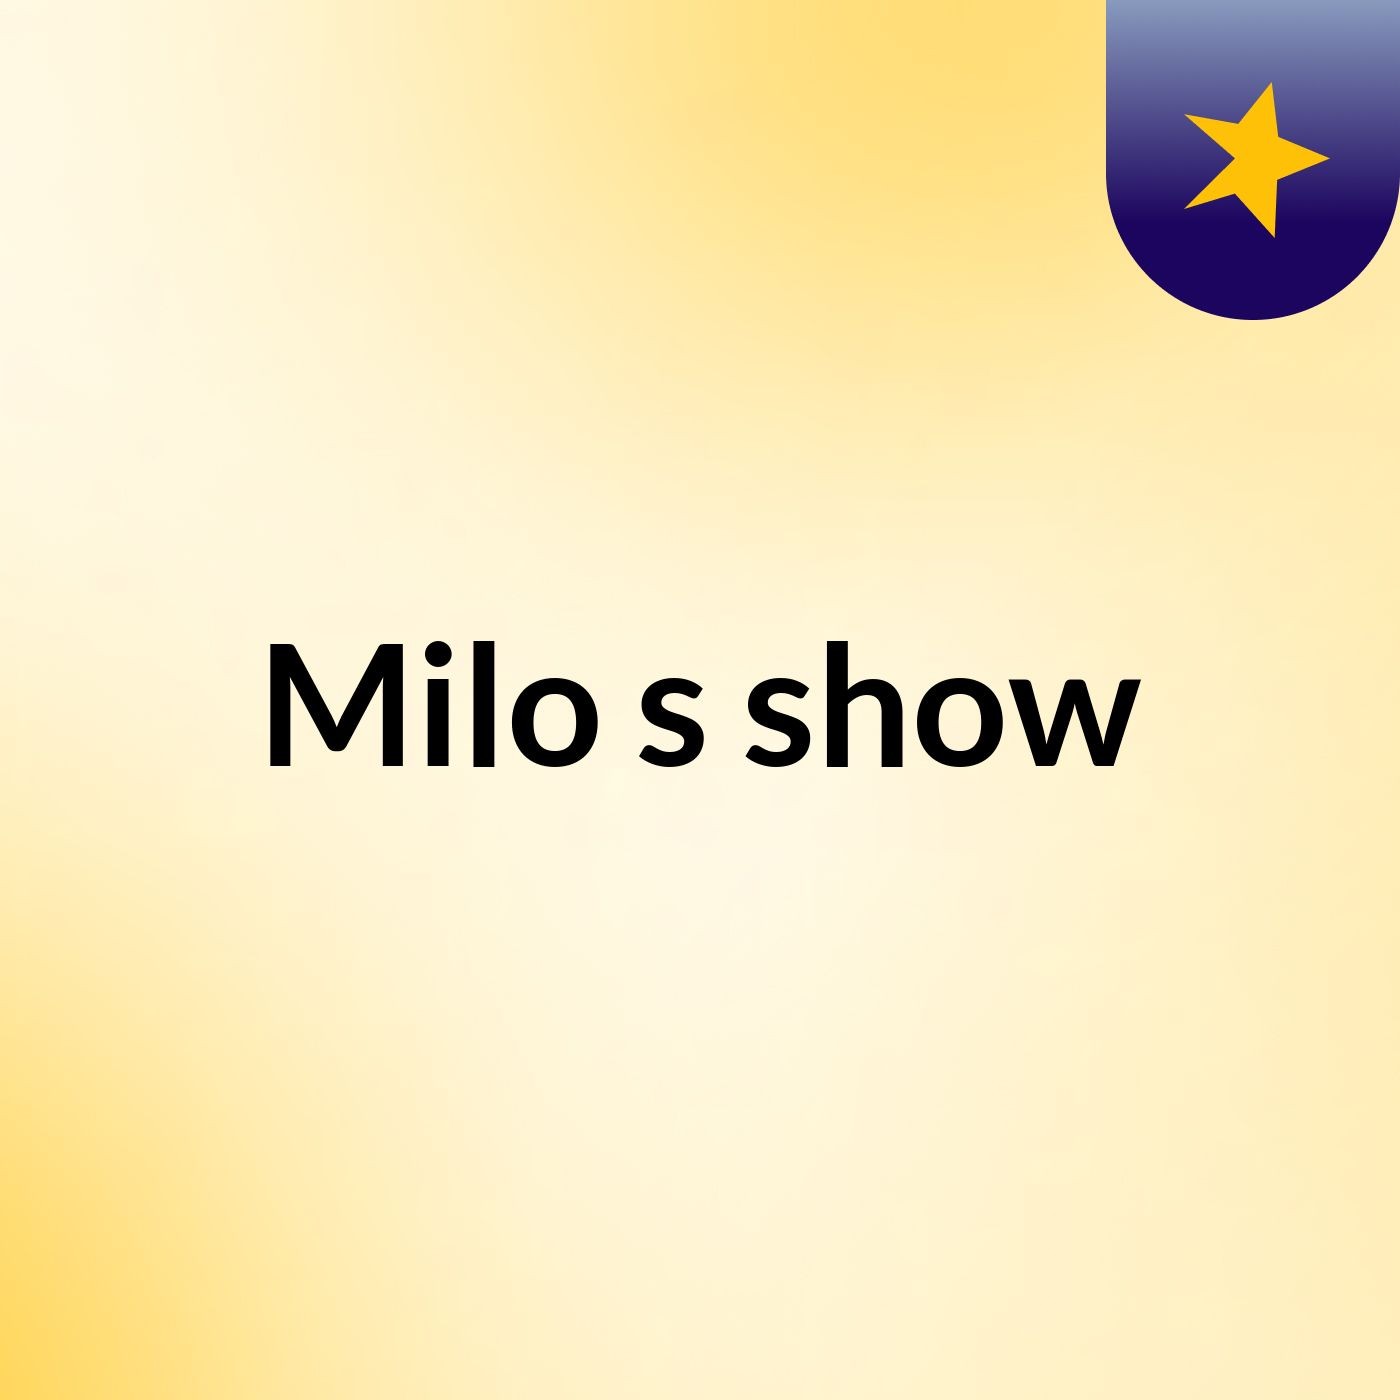 Milo's show